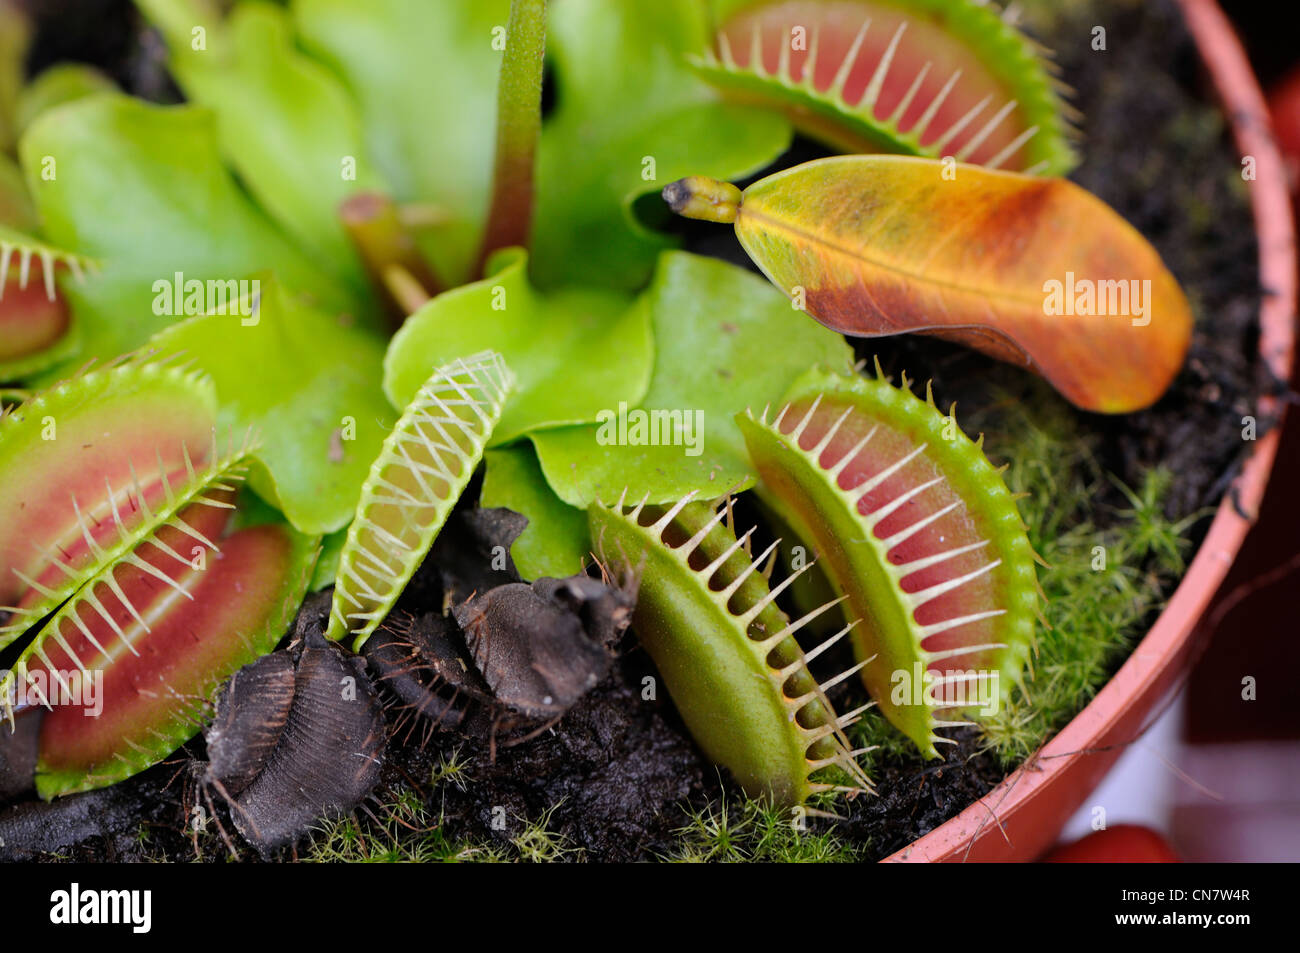 La France, Haut Rhin, jardin, plante, Dione (flytrap Dionaea muscipula)  lobes de la feuille ouverte de piéger un insecte Photo Stock - Alamy